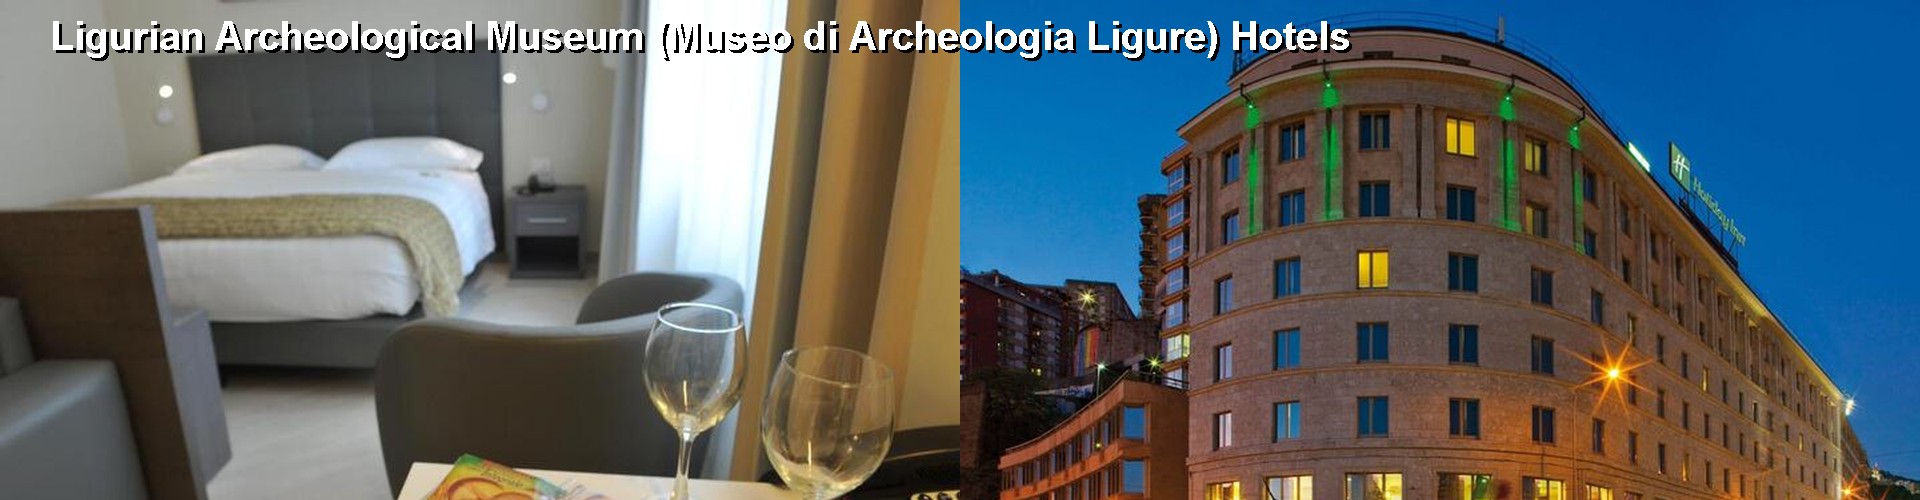 5 Best Hotels near Ligurian Archeological Museum (Museo di Archeologia Ligure)